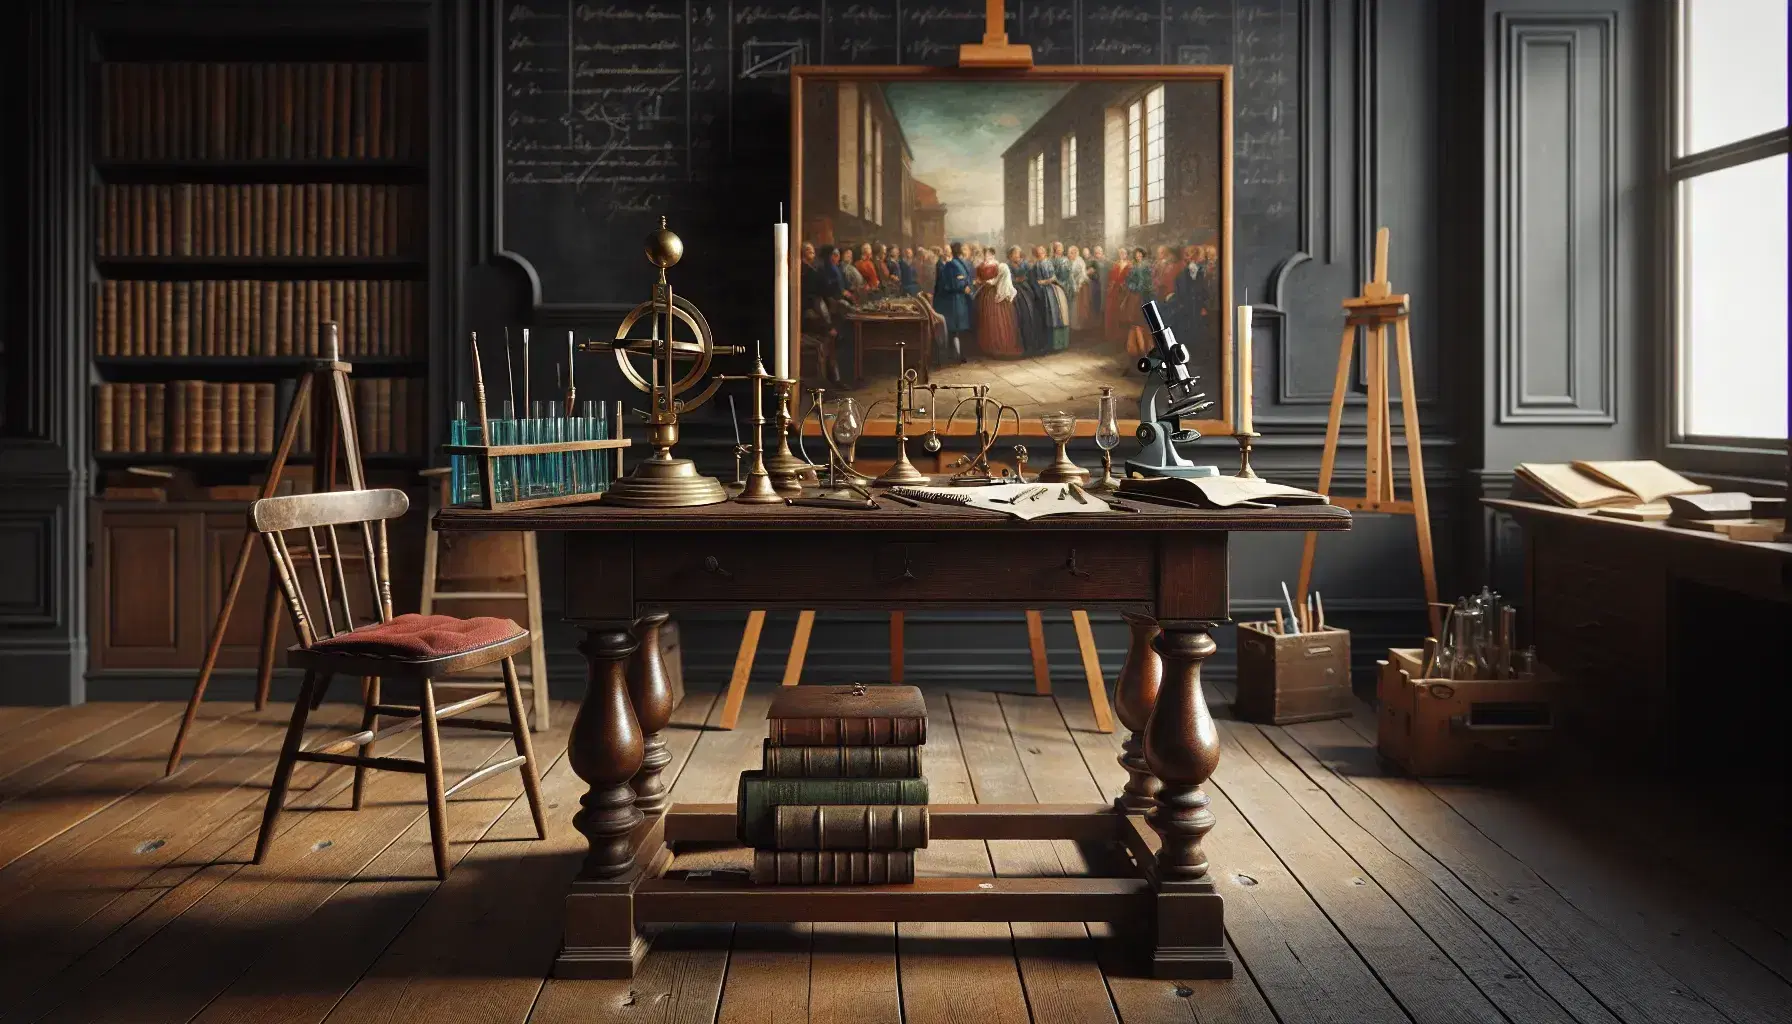 Aula del siglo XIX con mesa de madera oscura, esfera armilar, microscopio de latón, libros encuadernados, silla con cojín rojo, caballete con pintura y pizarra vacía.